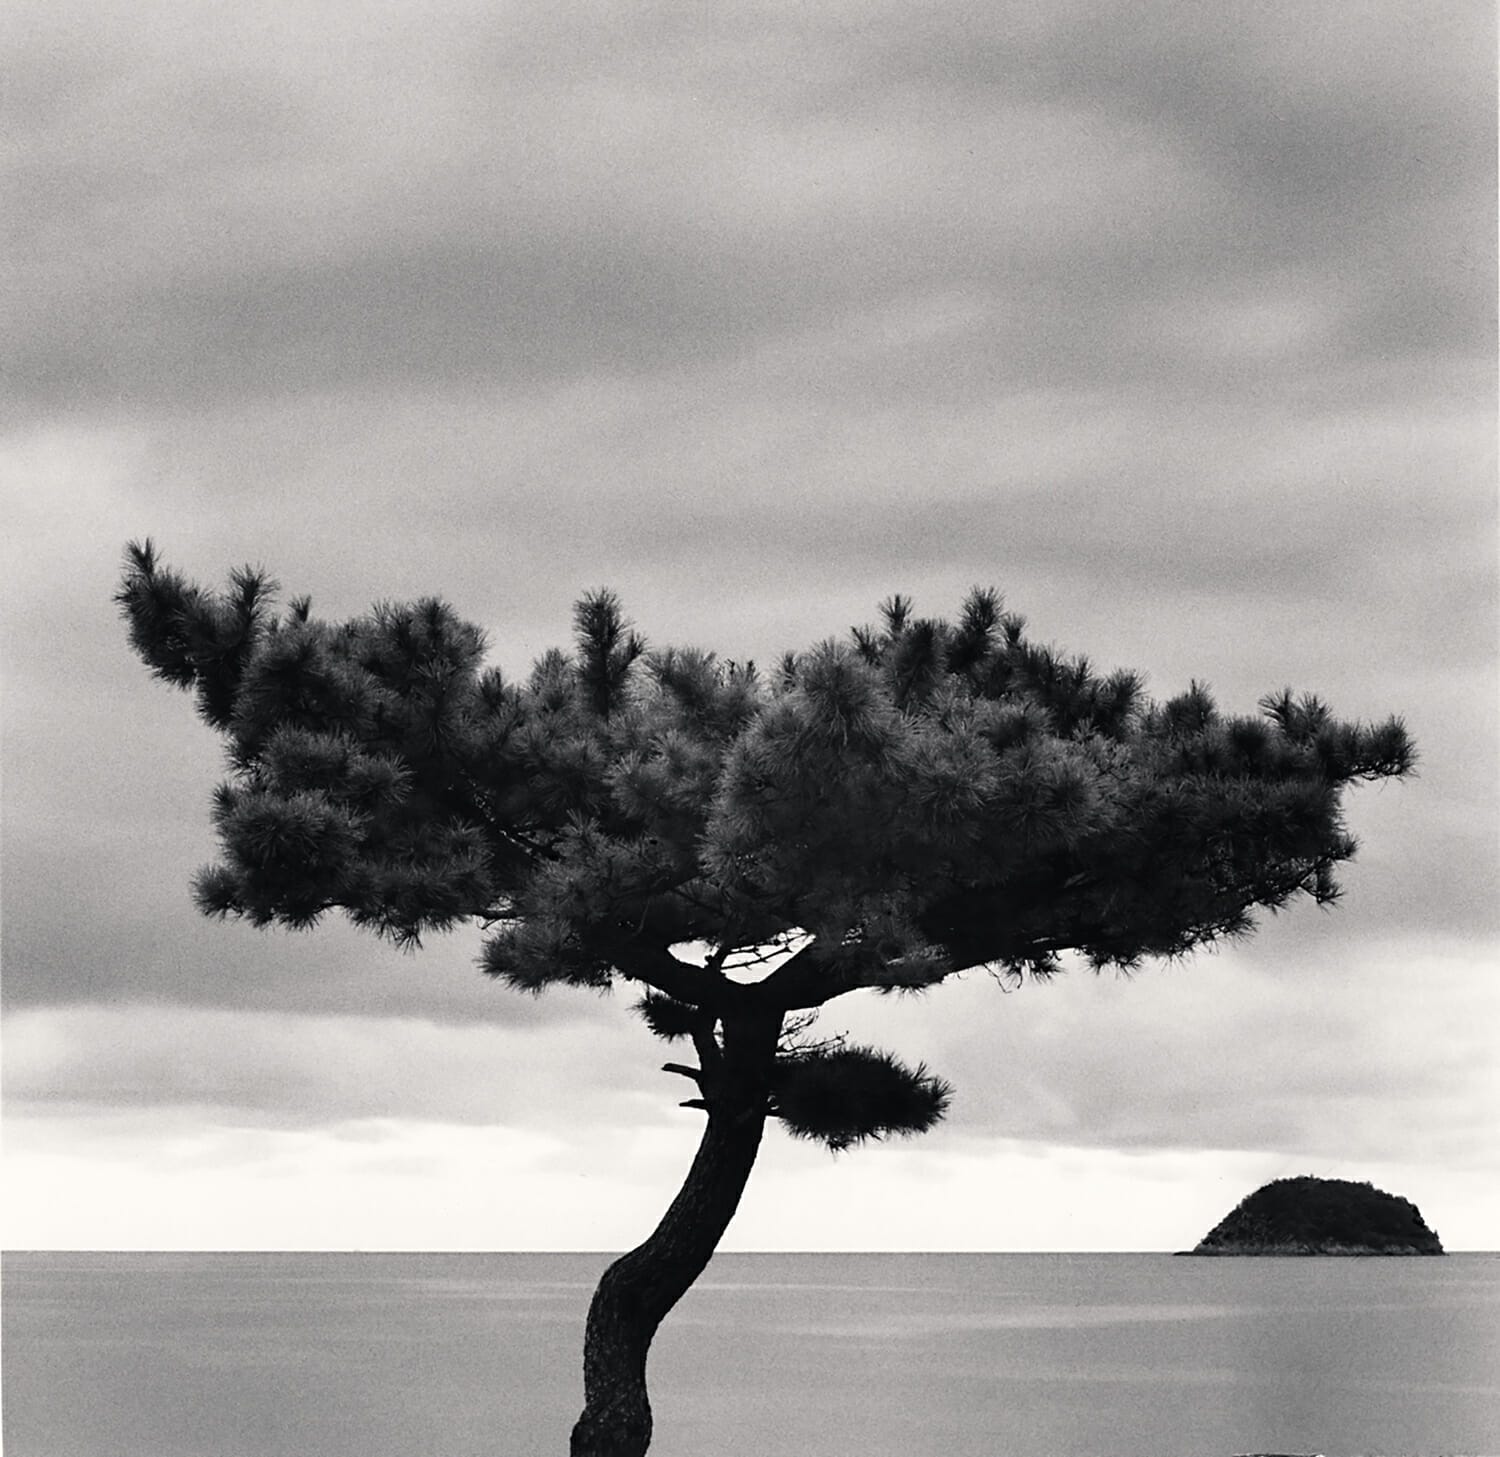 Pine Tree and Nago Island, Tsuda, Shikoku, Japan